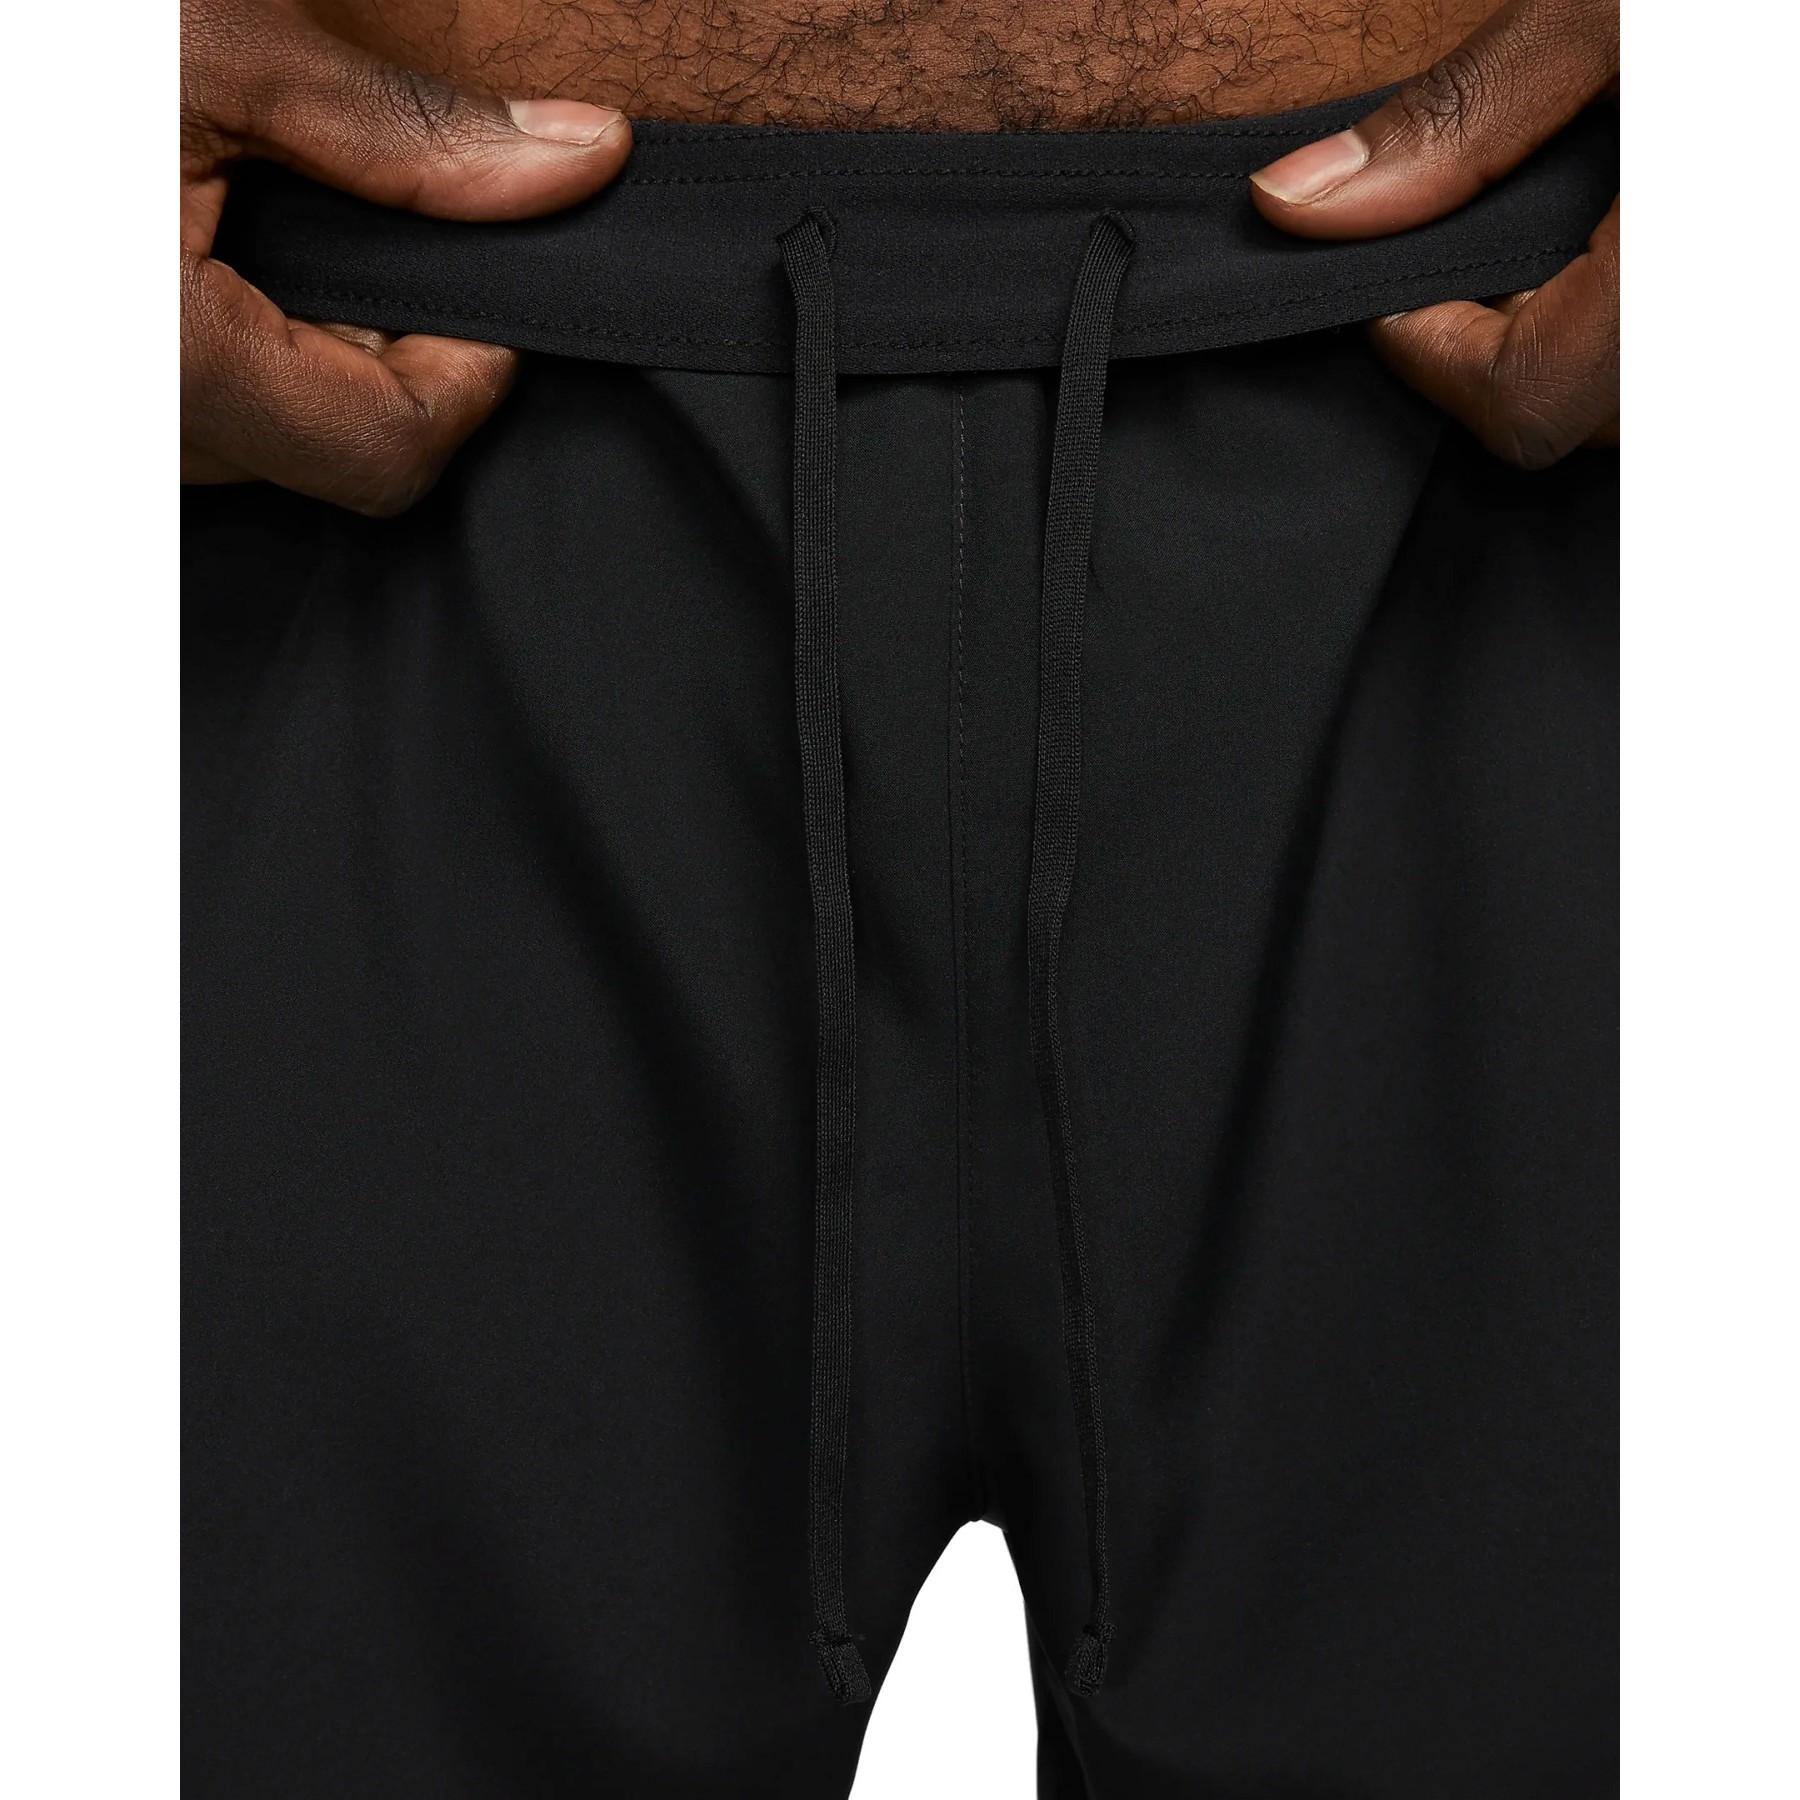 Men's DRI-FIT Challenger 7 Brief-Lined Shorts (010 - Black/Black